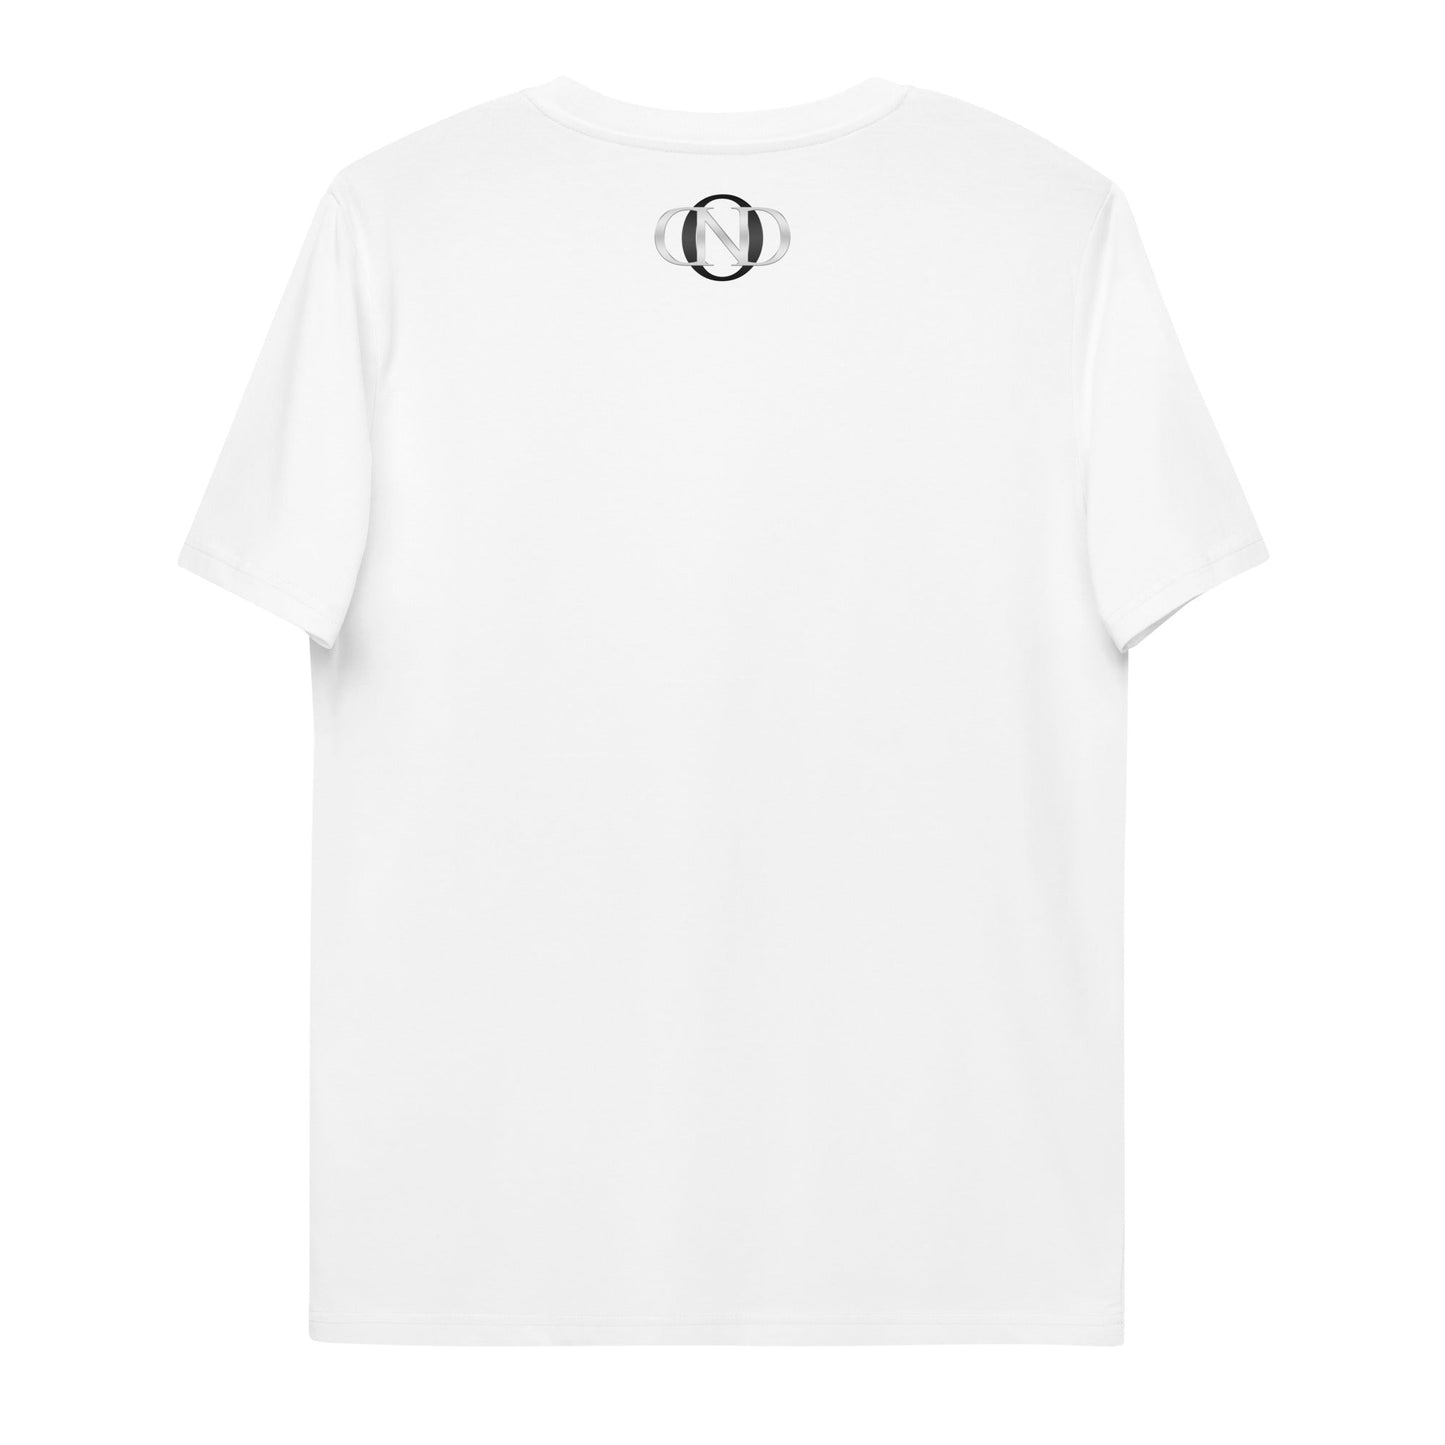 24 Neduz Designs Unisex Socialliberalerna Plain T-Shirt -